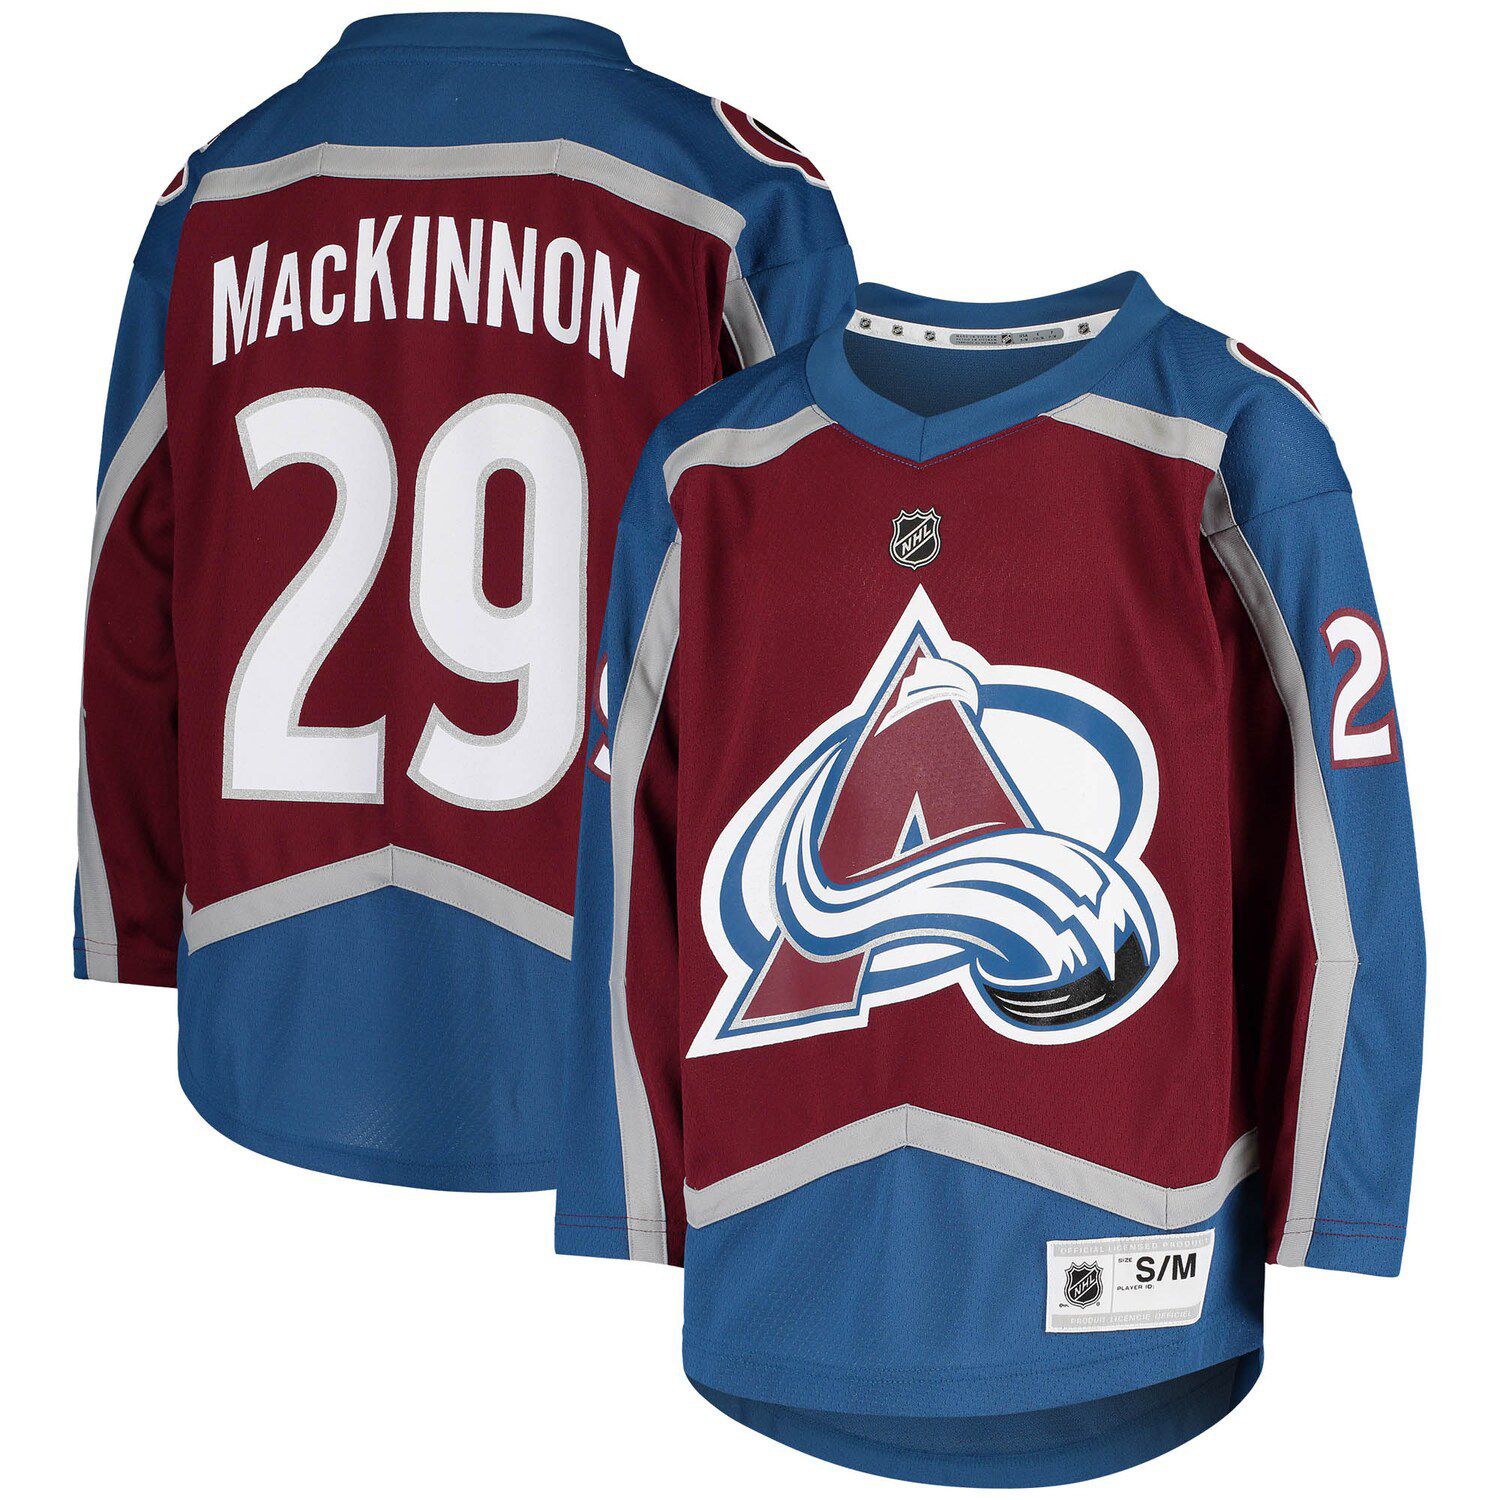 Nathan MacKinnon Avalanche jersey